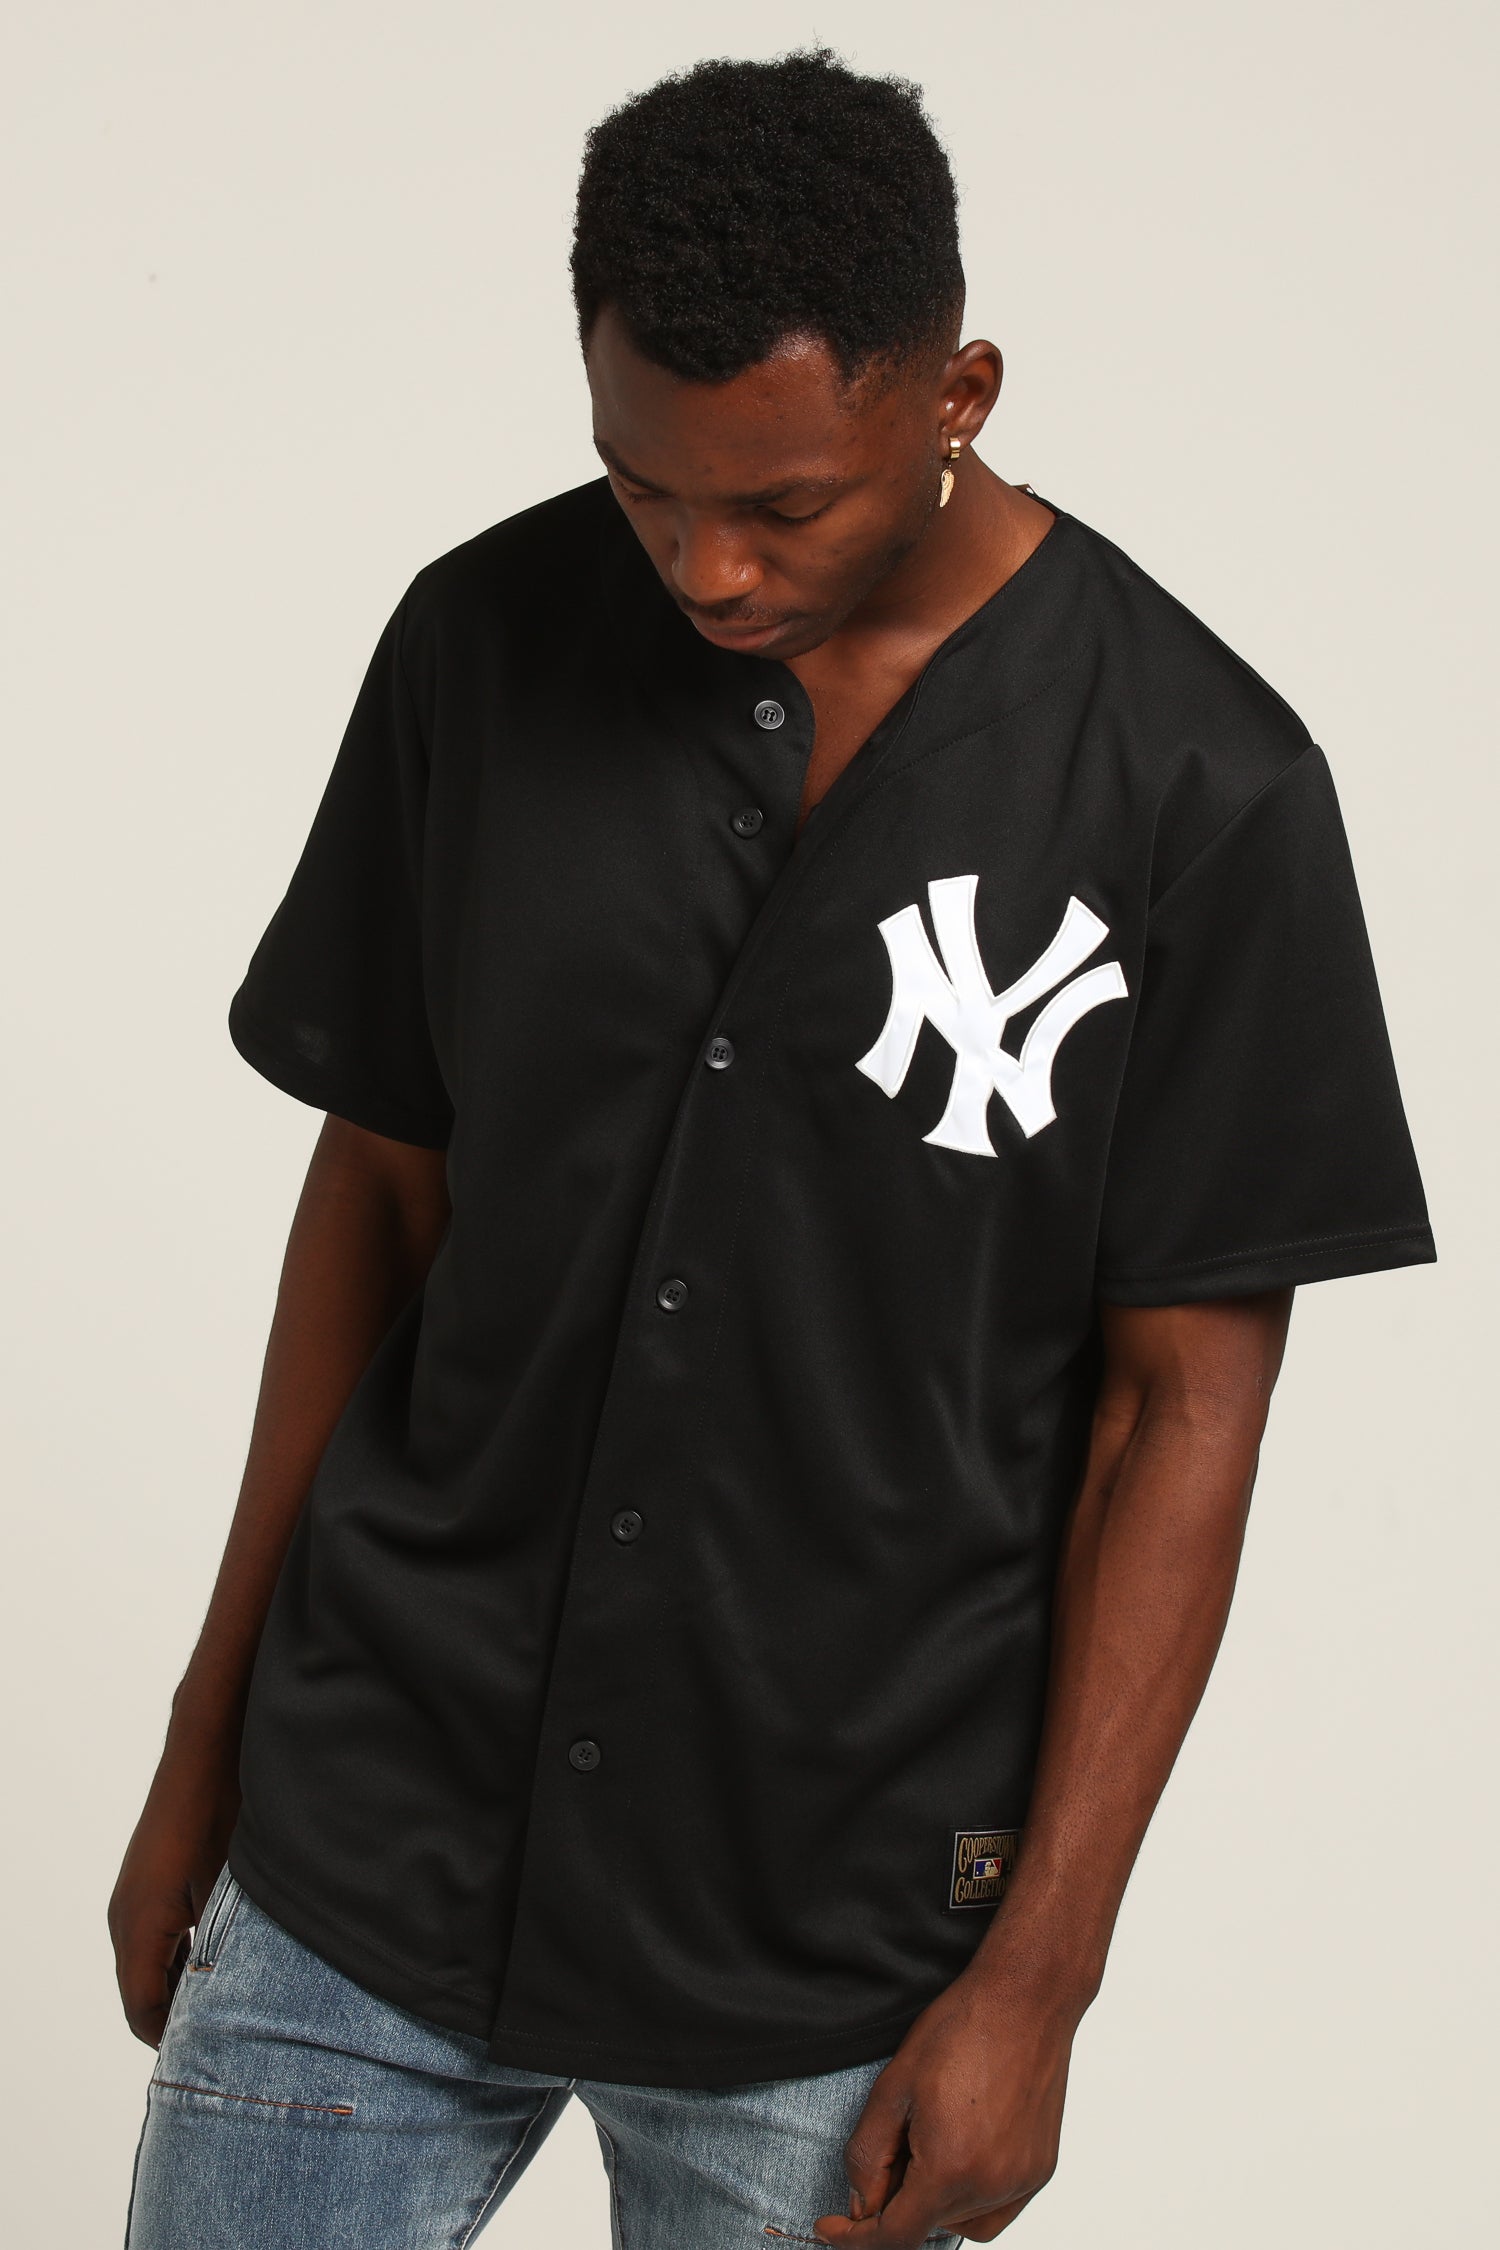 new york yankees black jersey